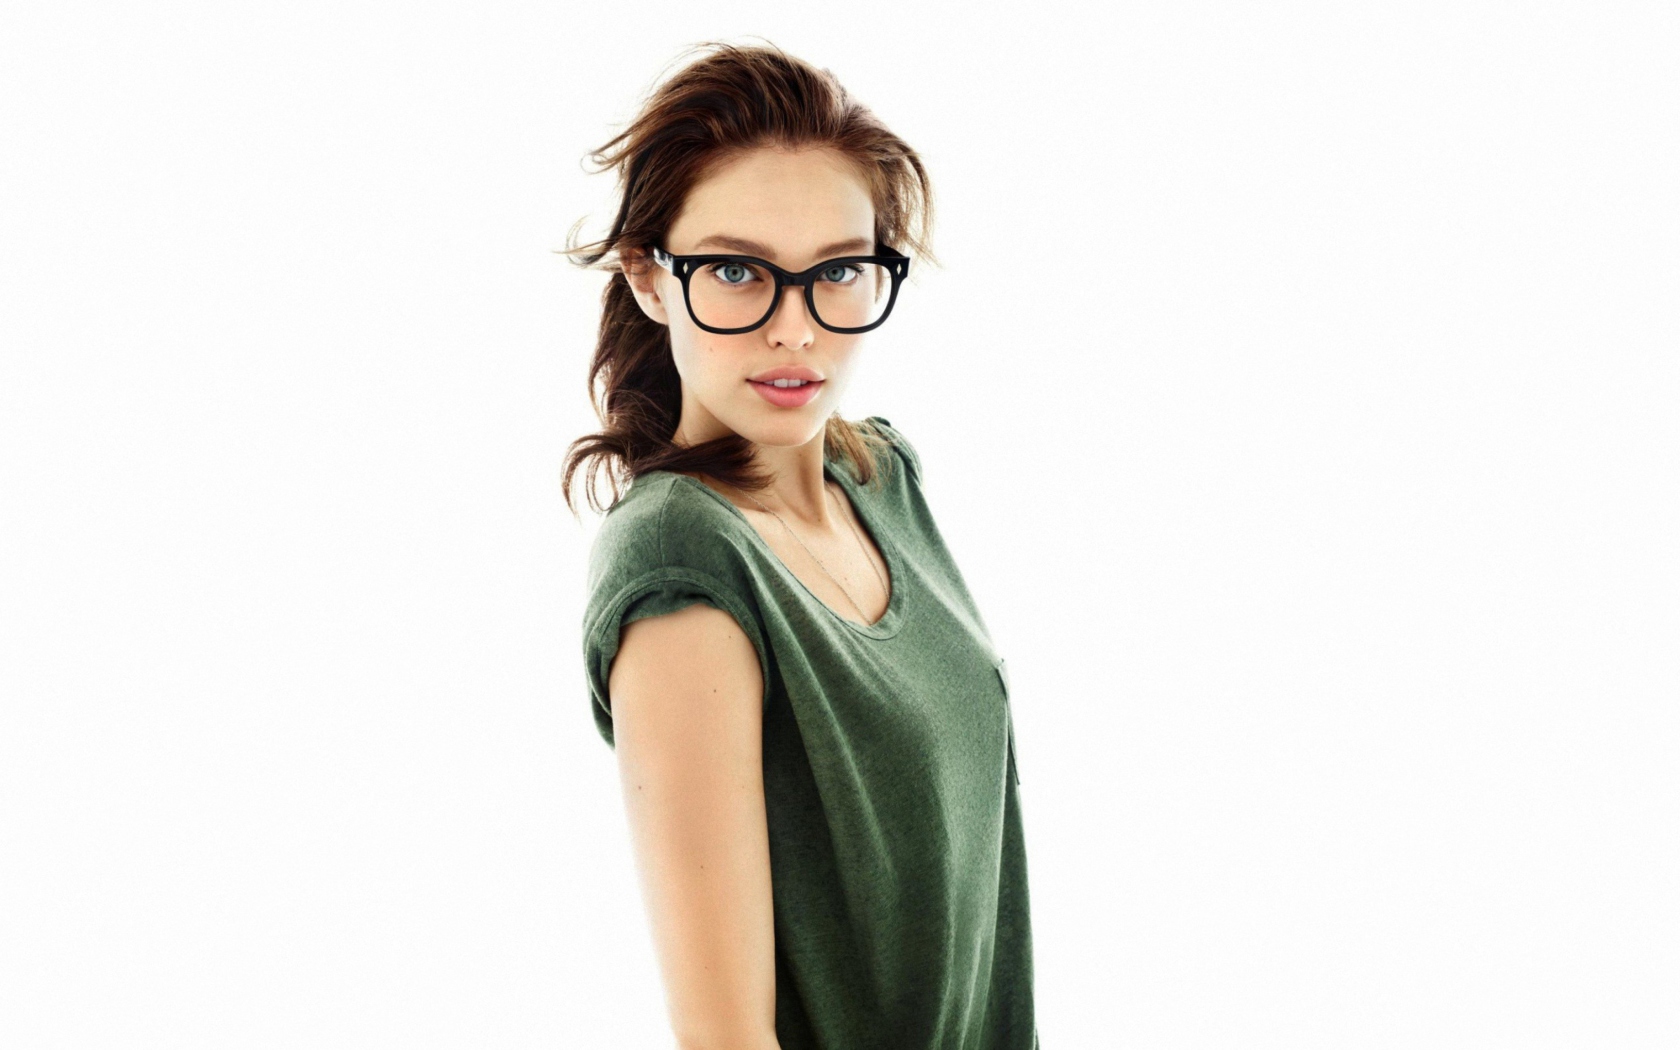 Very Cute Girl In Big Glasses wallpaper 1680x1050